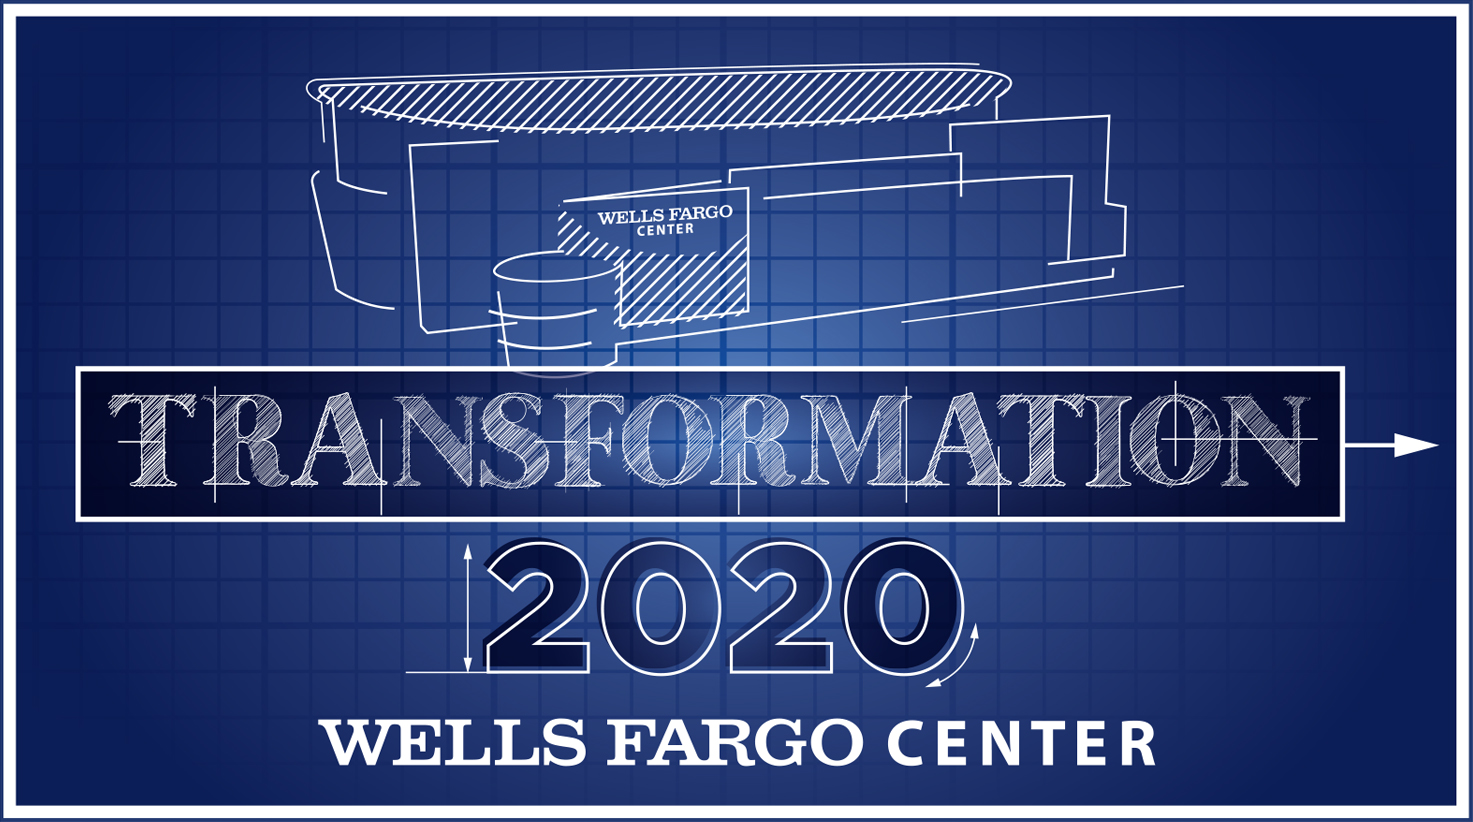 Wells Fargo Center to debut world's first kinetic 4K scoreboard 